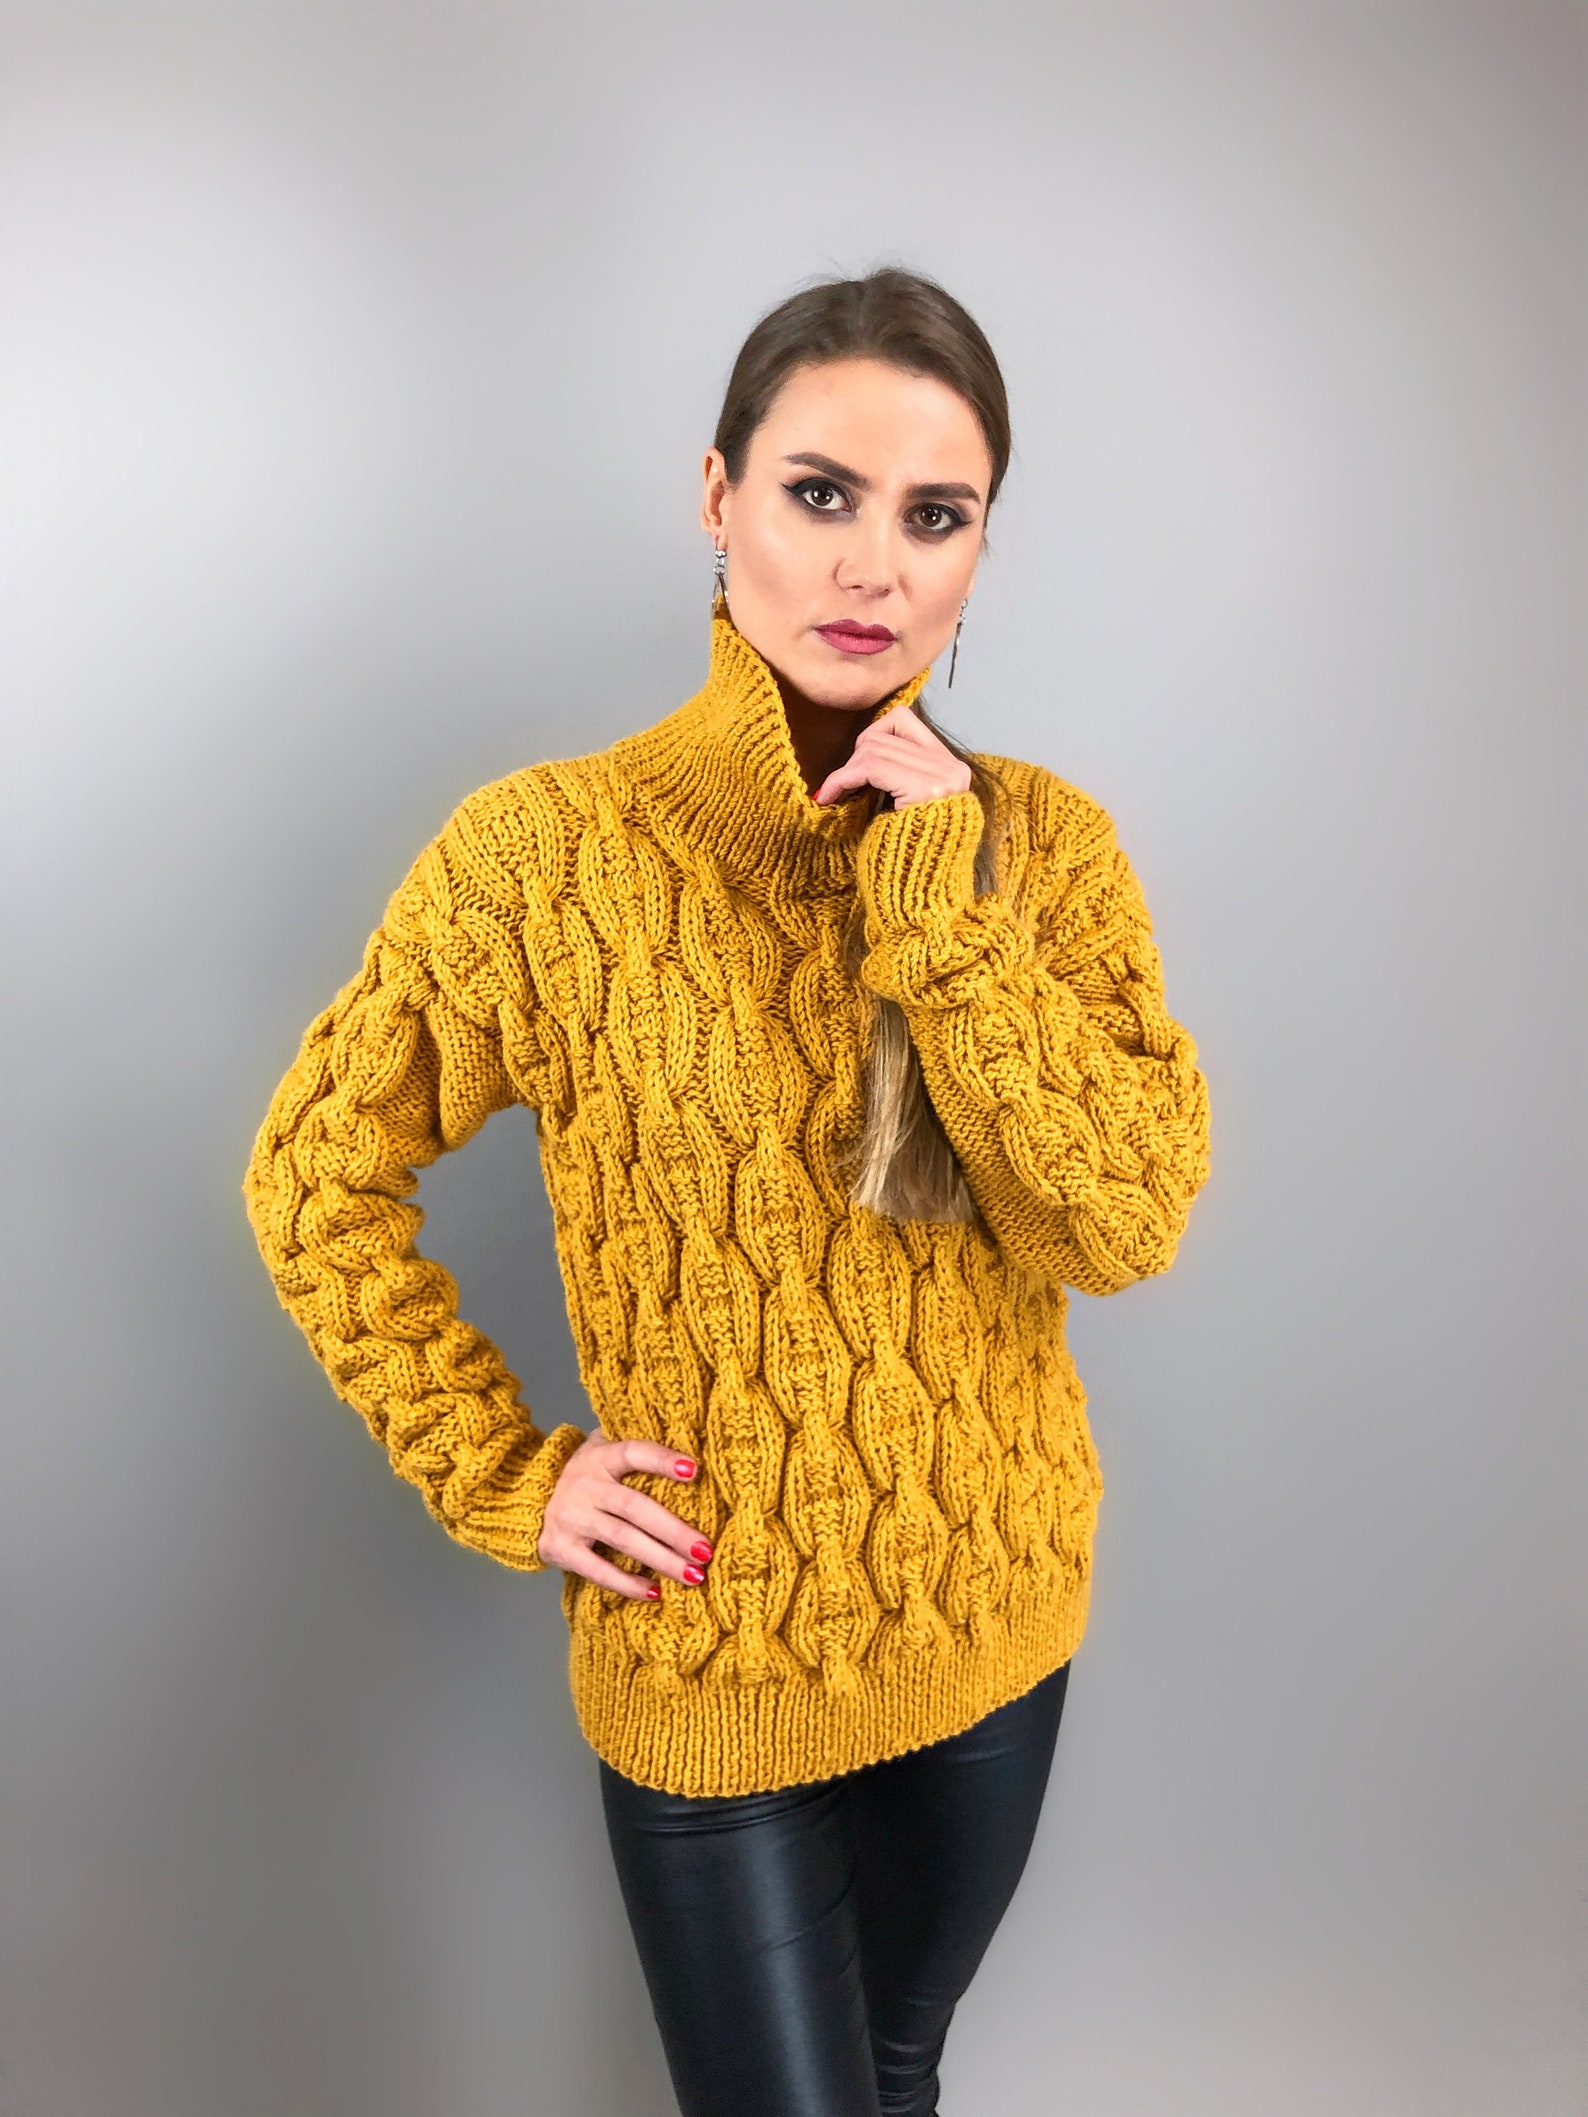 Mustard yellow turtleneck jumper pull over sweater | Etsy